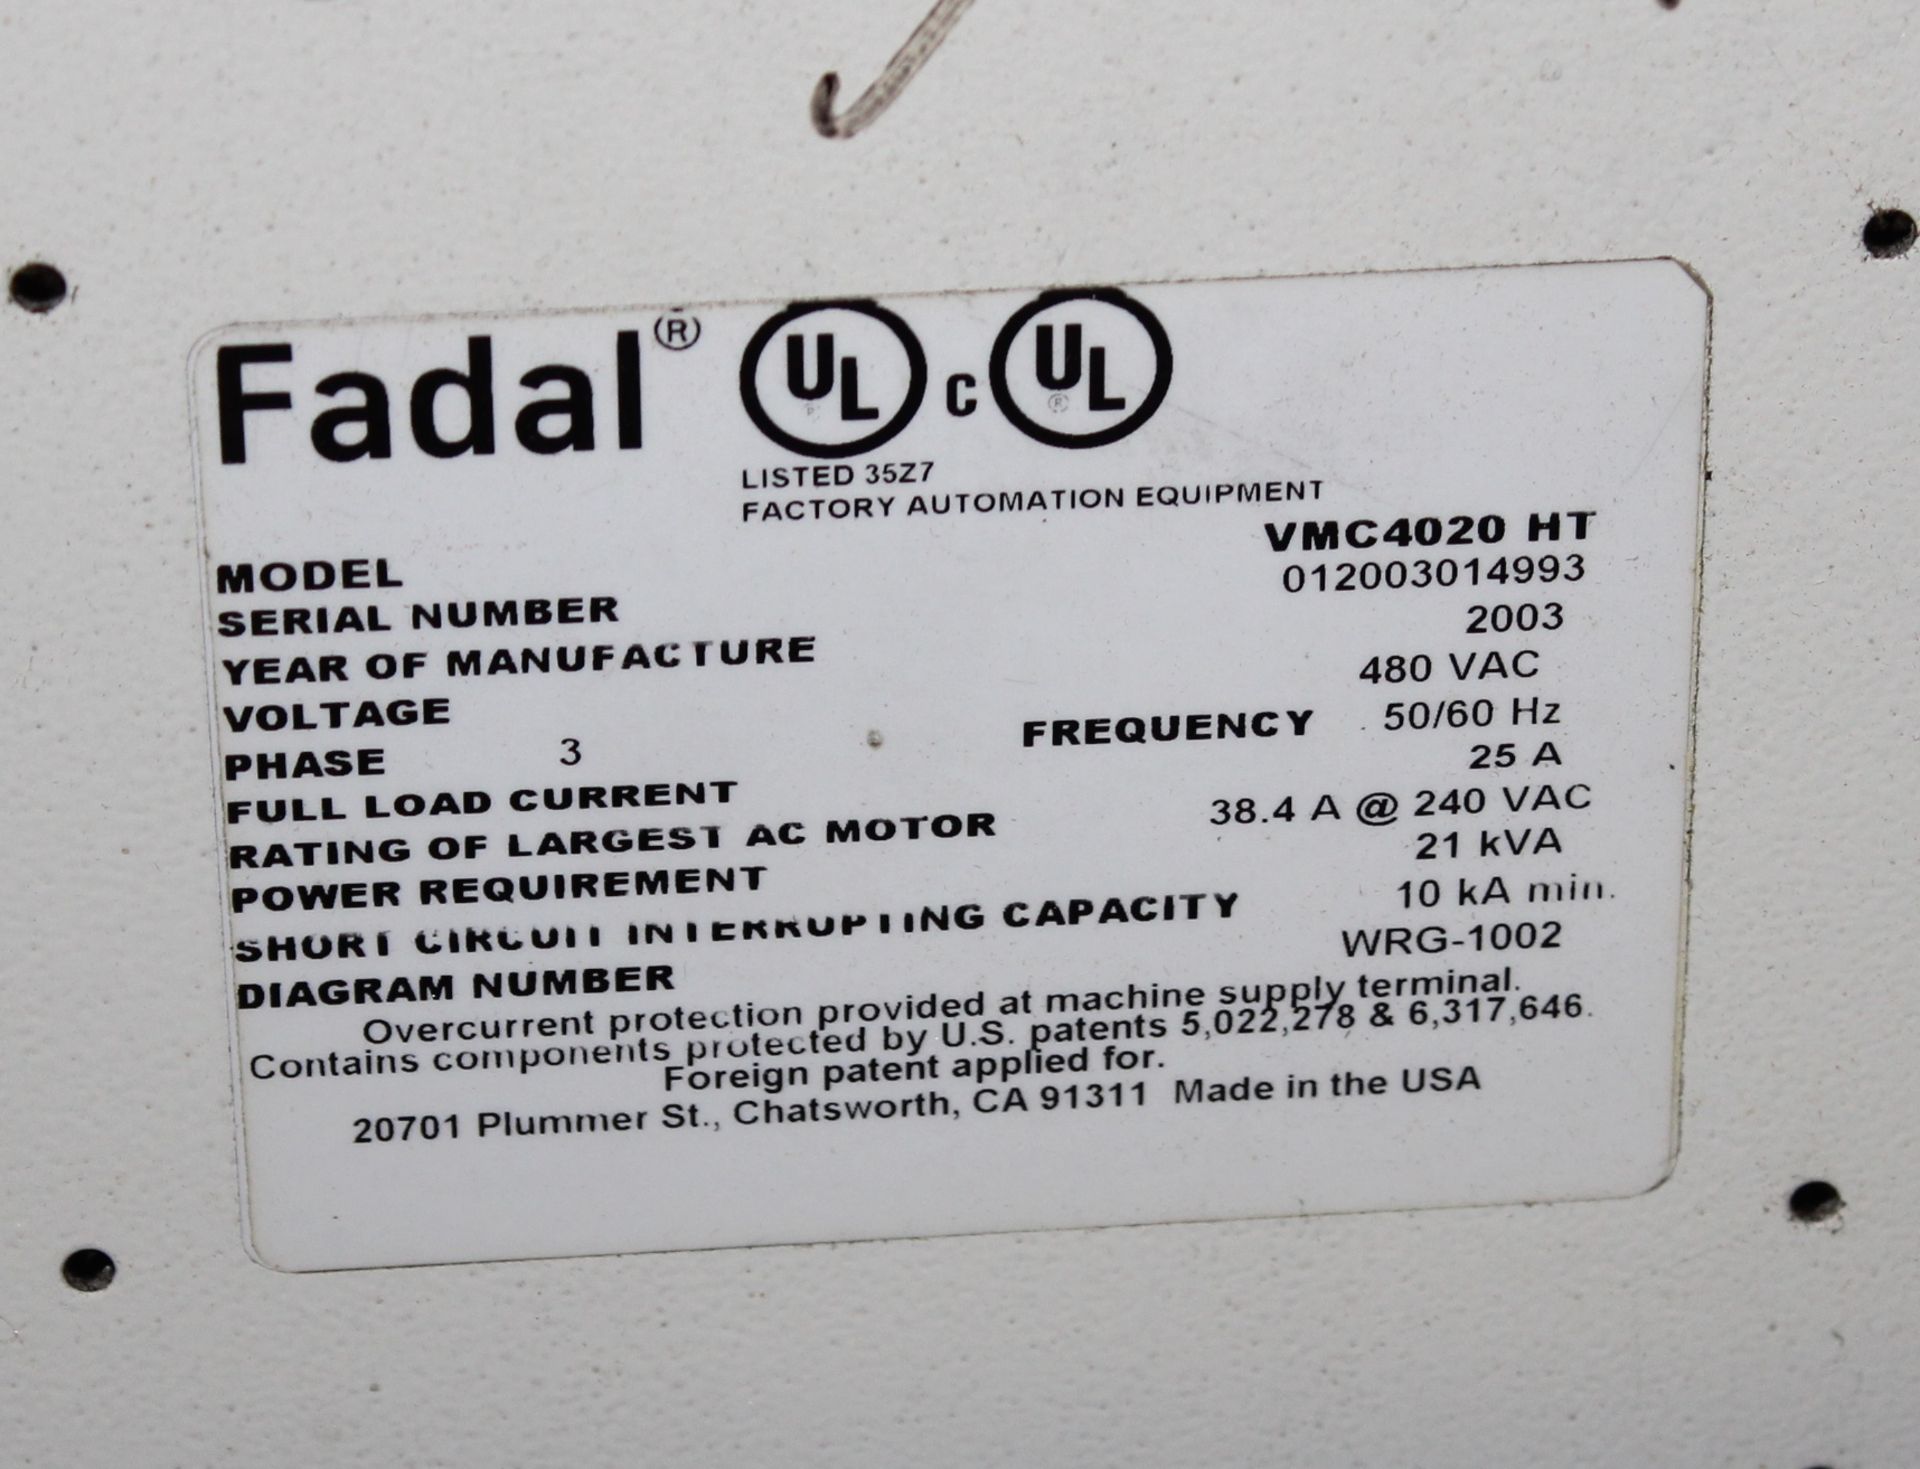 2005 Fadal model VM 4020 vertical milling machine - Image 6 of 6